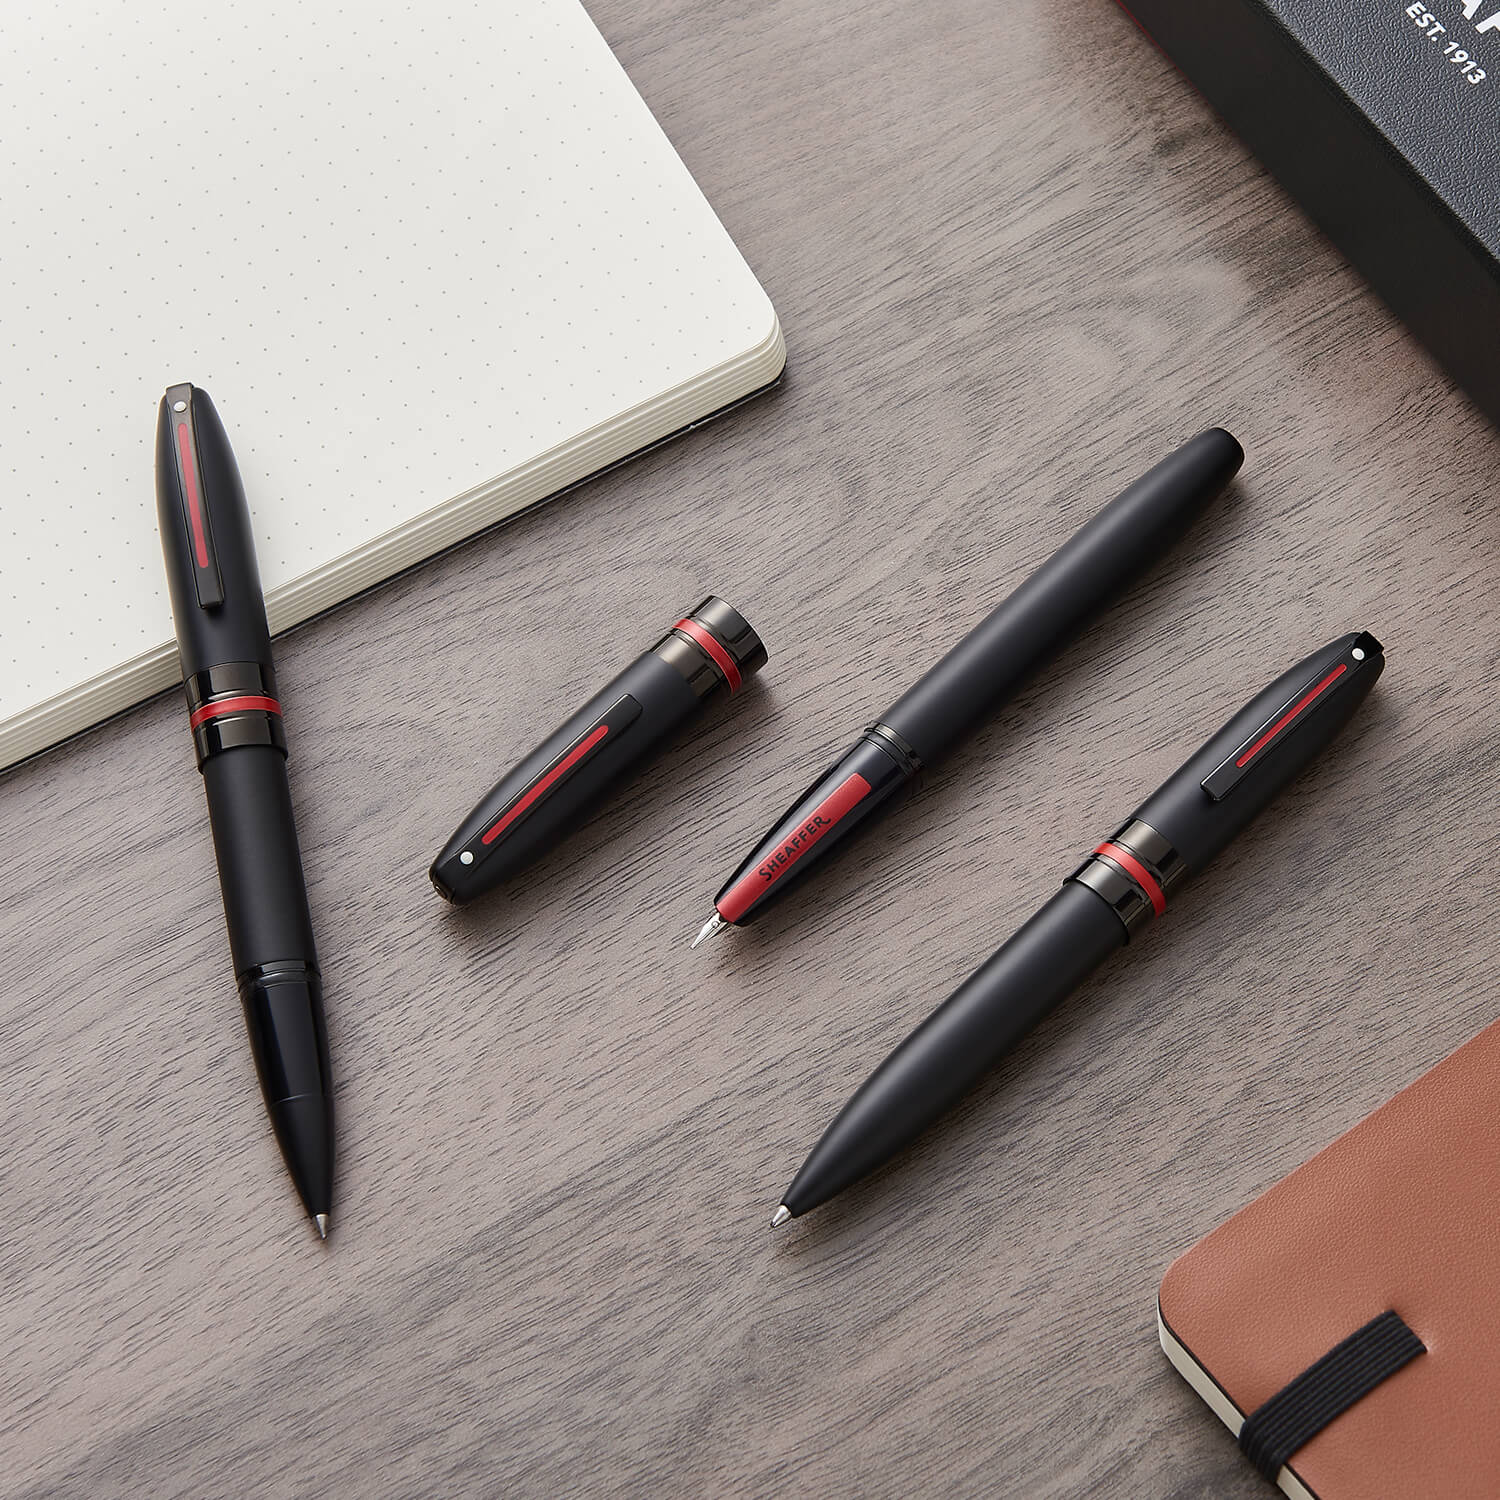 Sheaffer® ICON 9108 Matte Black Ballpoint Pen With Gloss Black Trim